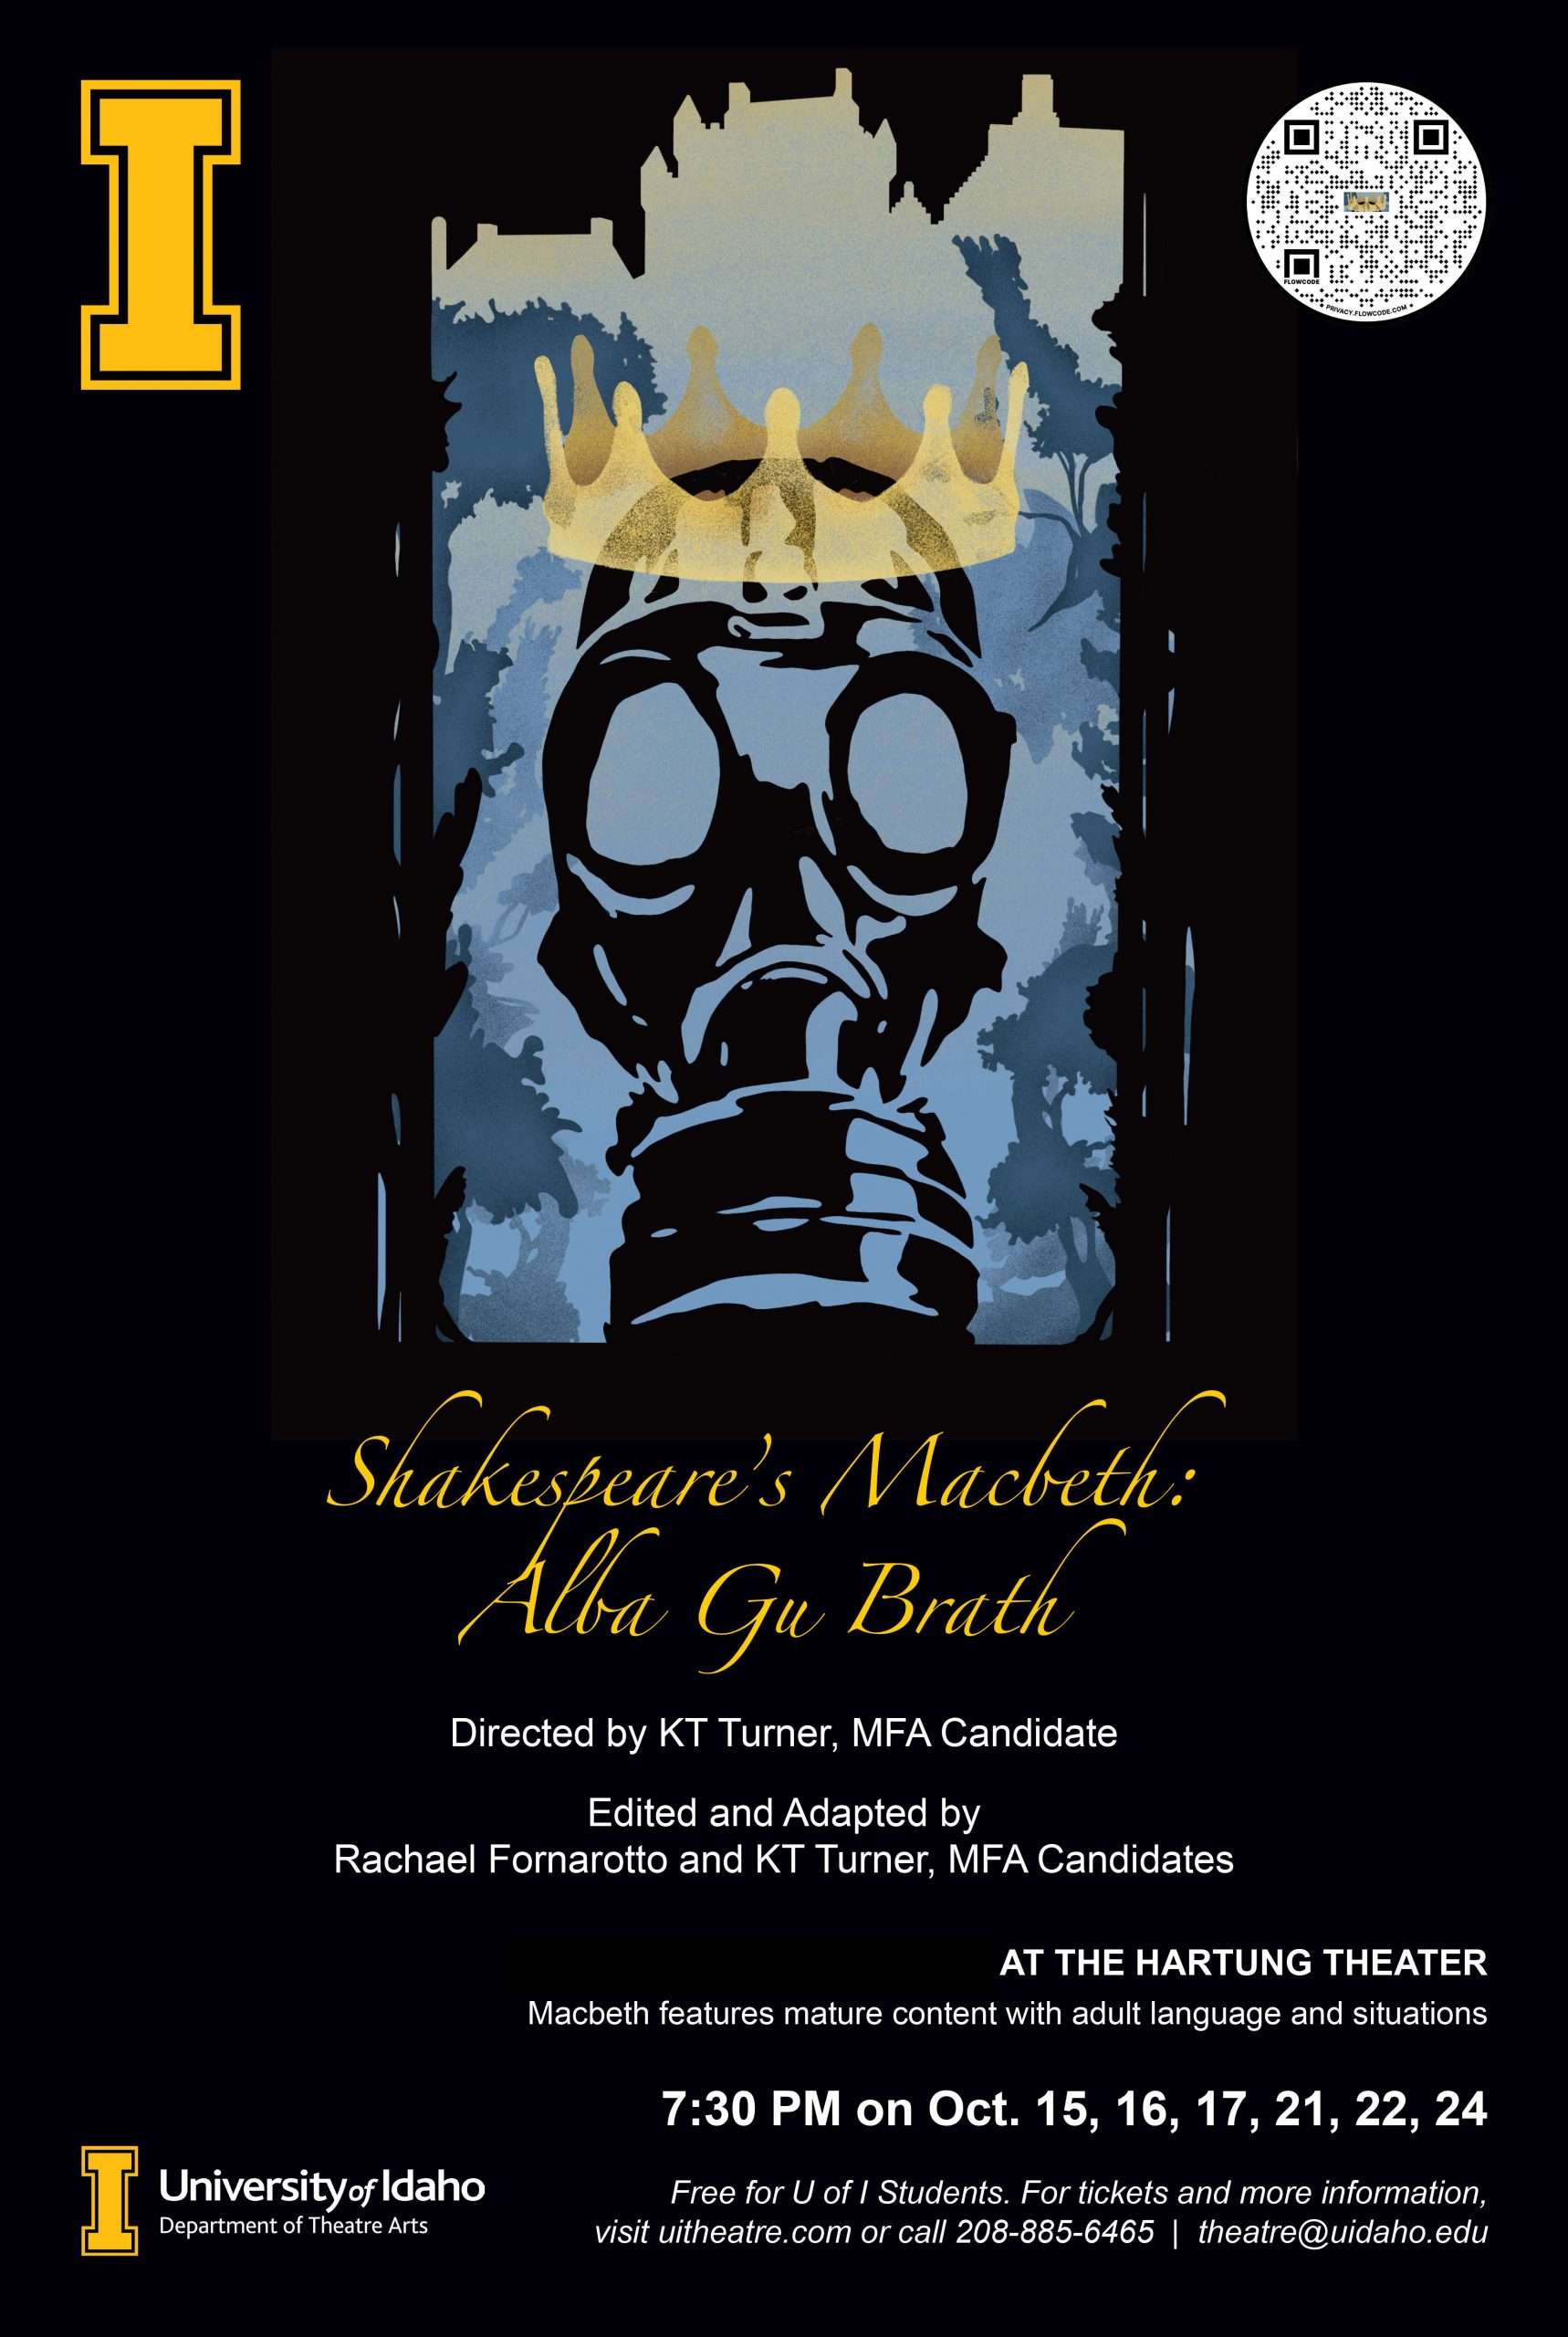 Shakespeare's Macbeth: Alba Gu Brath